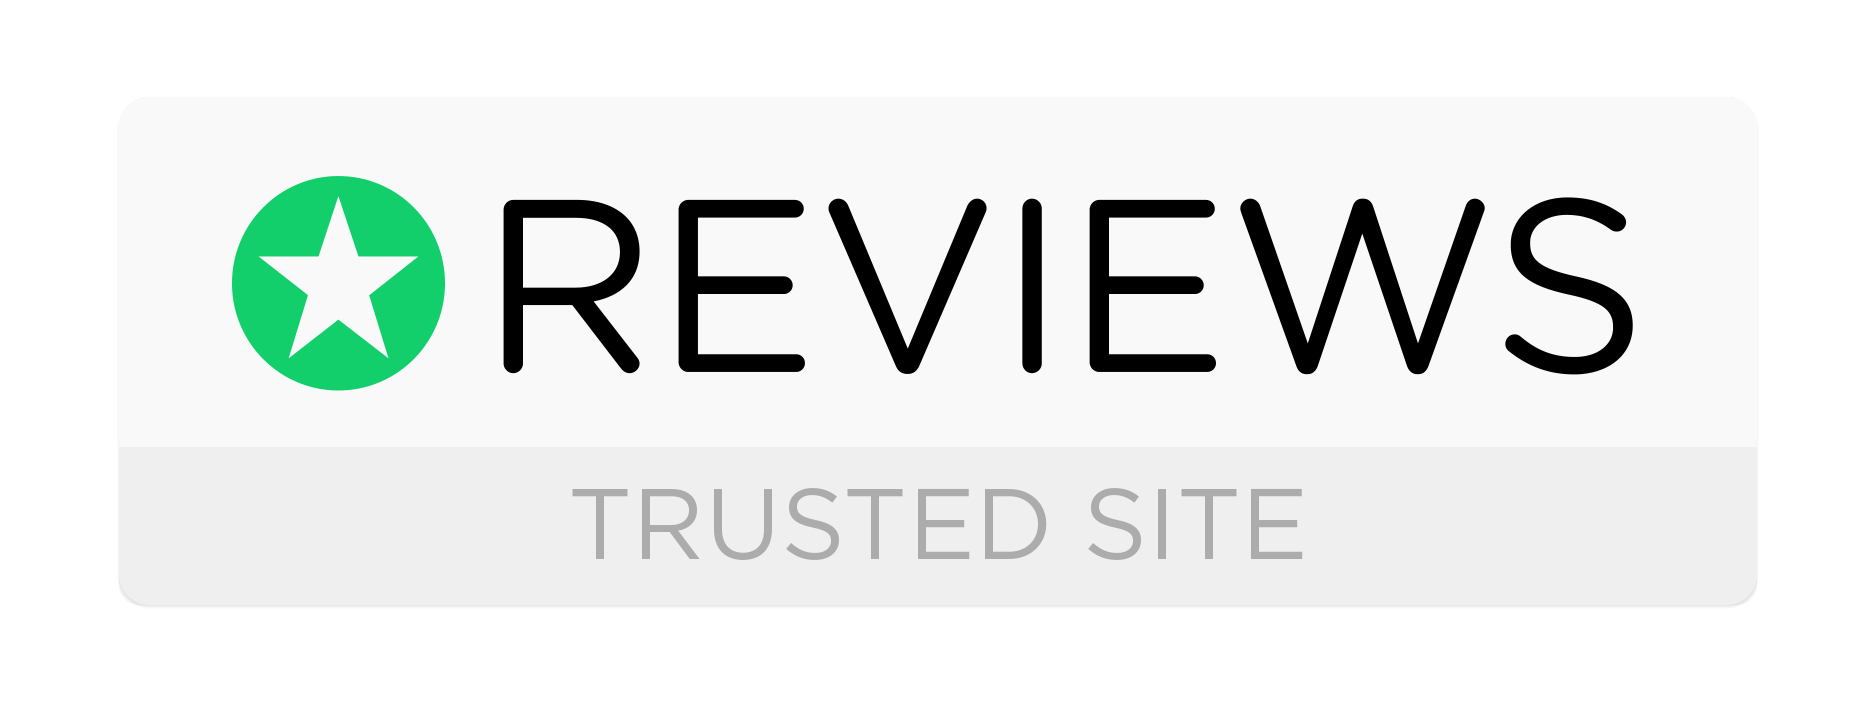 Trustpilot Reviews- A trusted Site